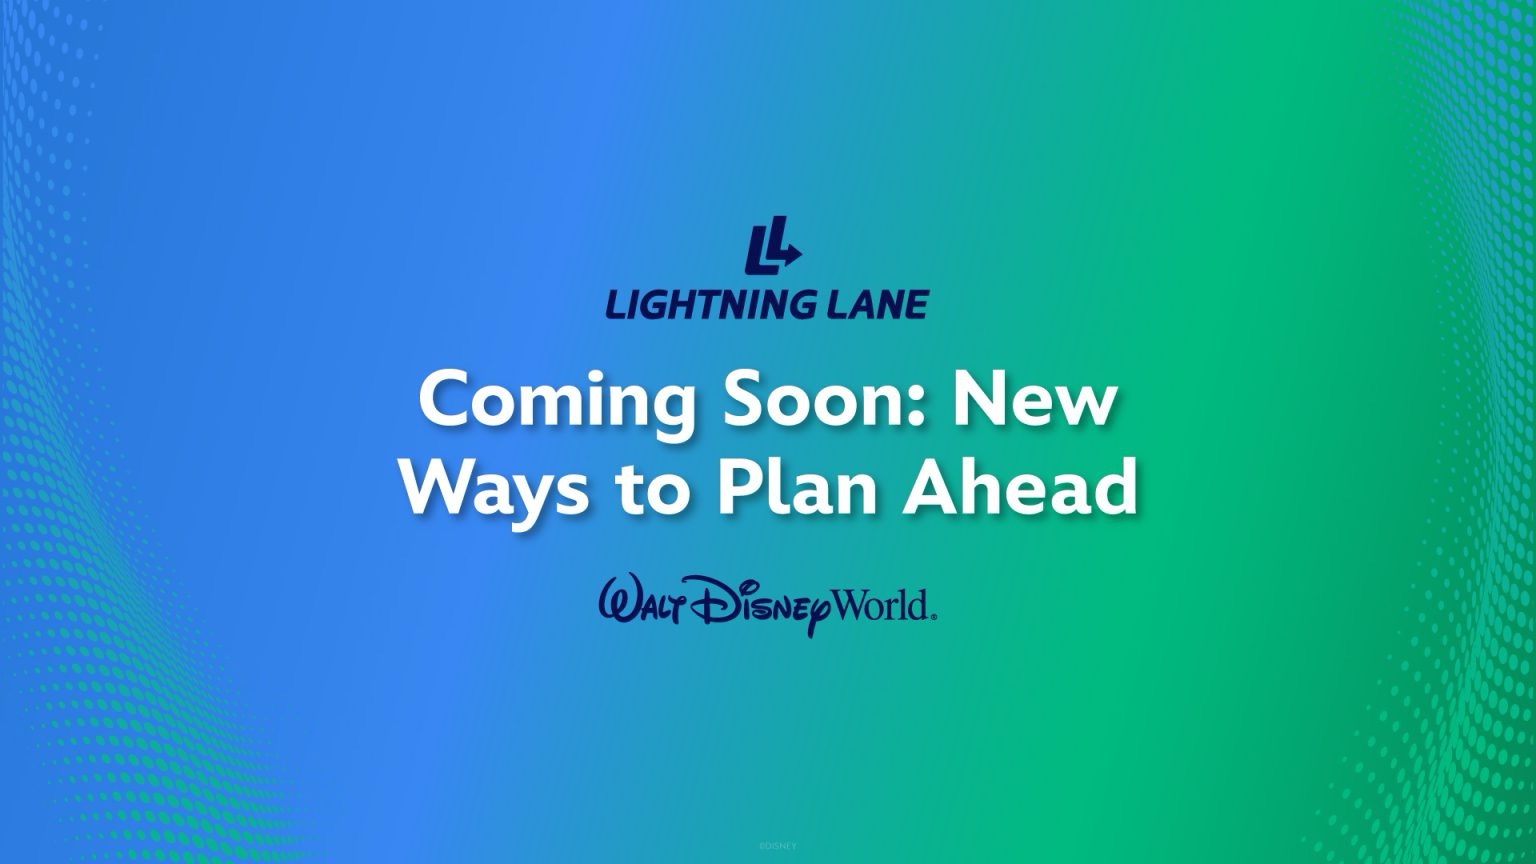 BREAKING: Changes to Walt Disney World Lightning Lane Announced